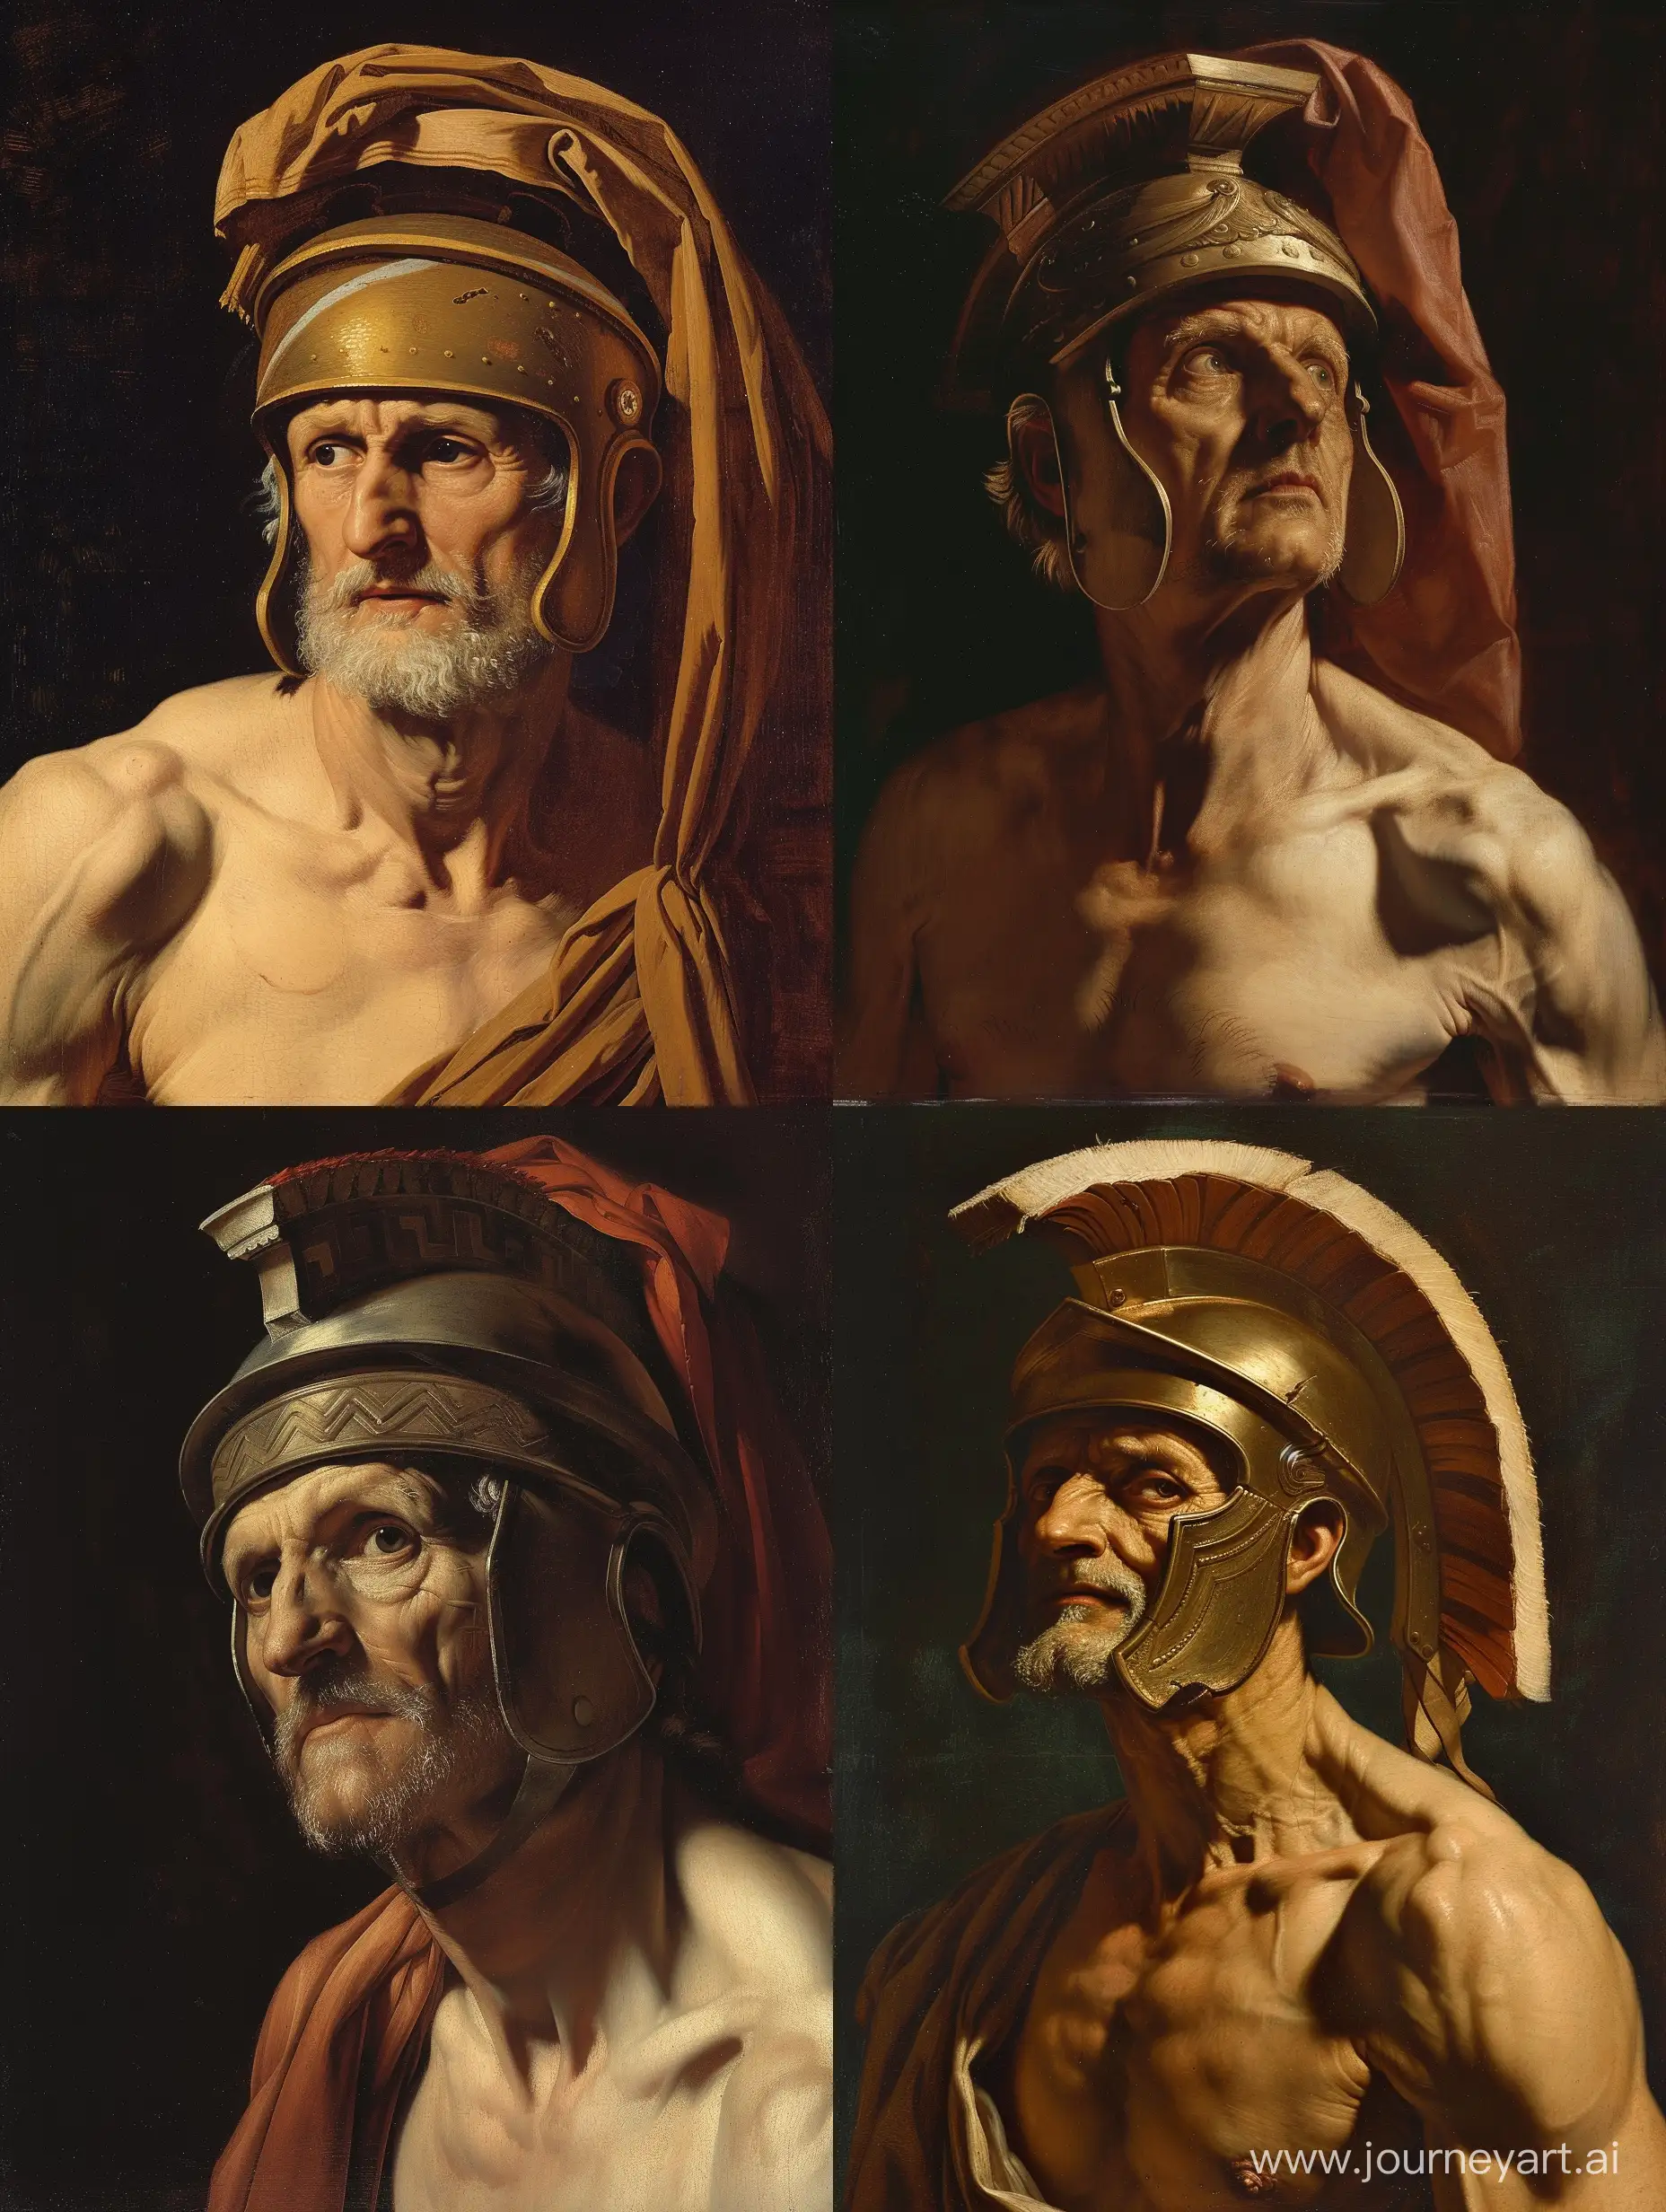 https://i.etsystatic.com/11651996/r/il/73ca96/1052590995/il_1080xN.1052590995_ad0e.jpg Renaissance painting of Julius caesar wearing greek helmet 